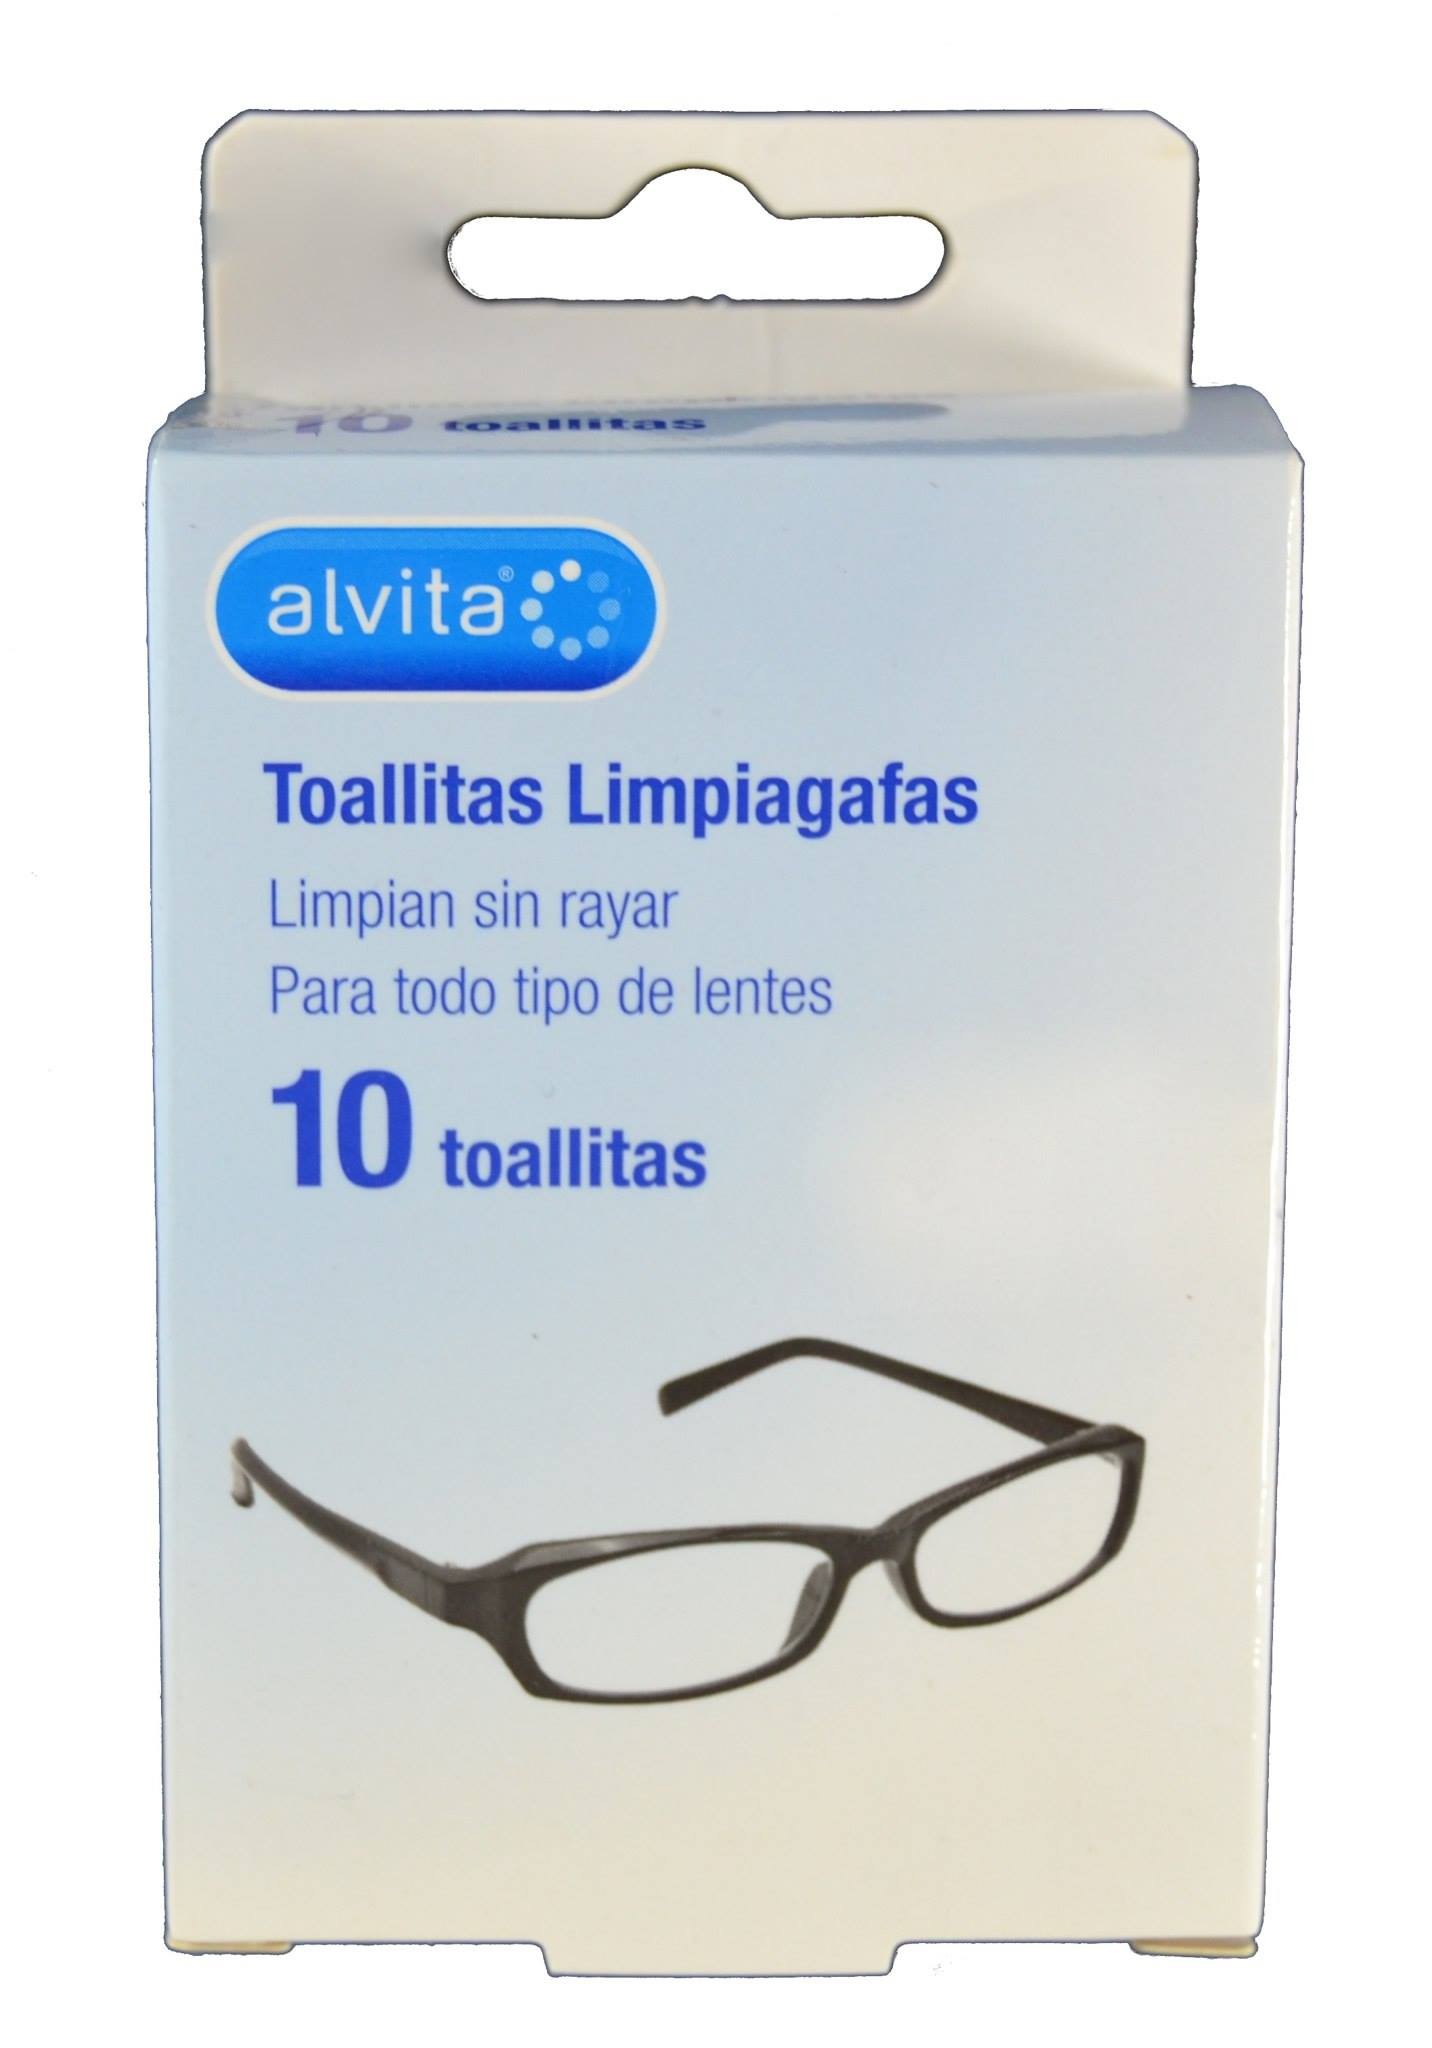 LIMPIAGAFAS 10 TOALLITAS ALVITA - Farmacia Anna Riba